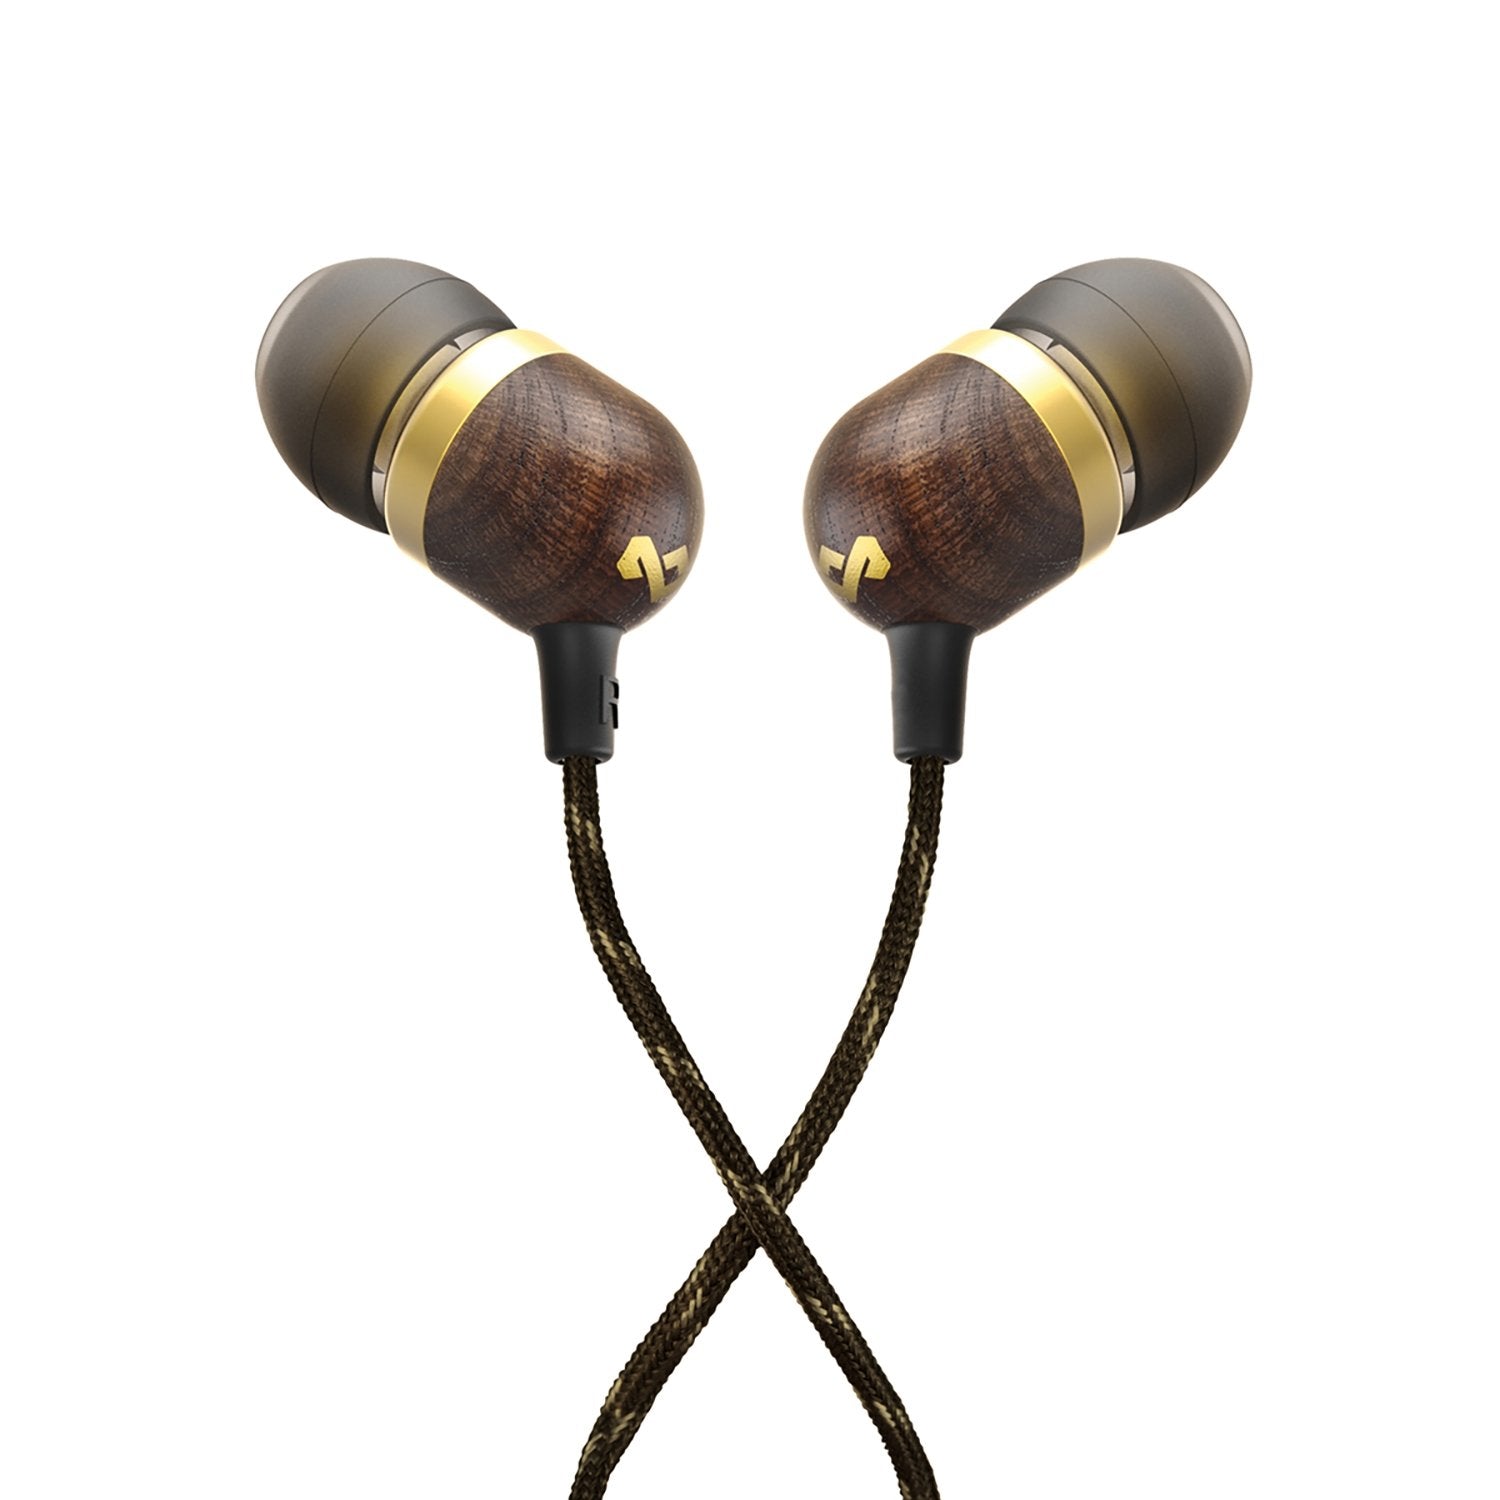 Ecouteurs Bluetooth sans fil Rebel Earbuds – Marley-2020-fr